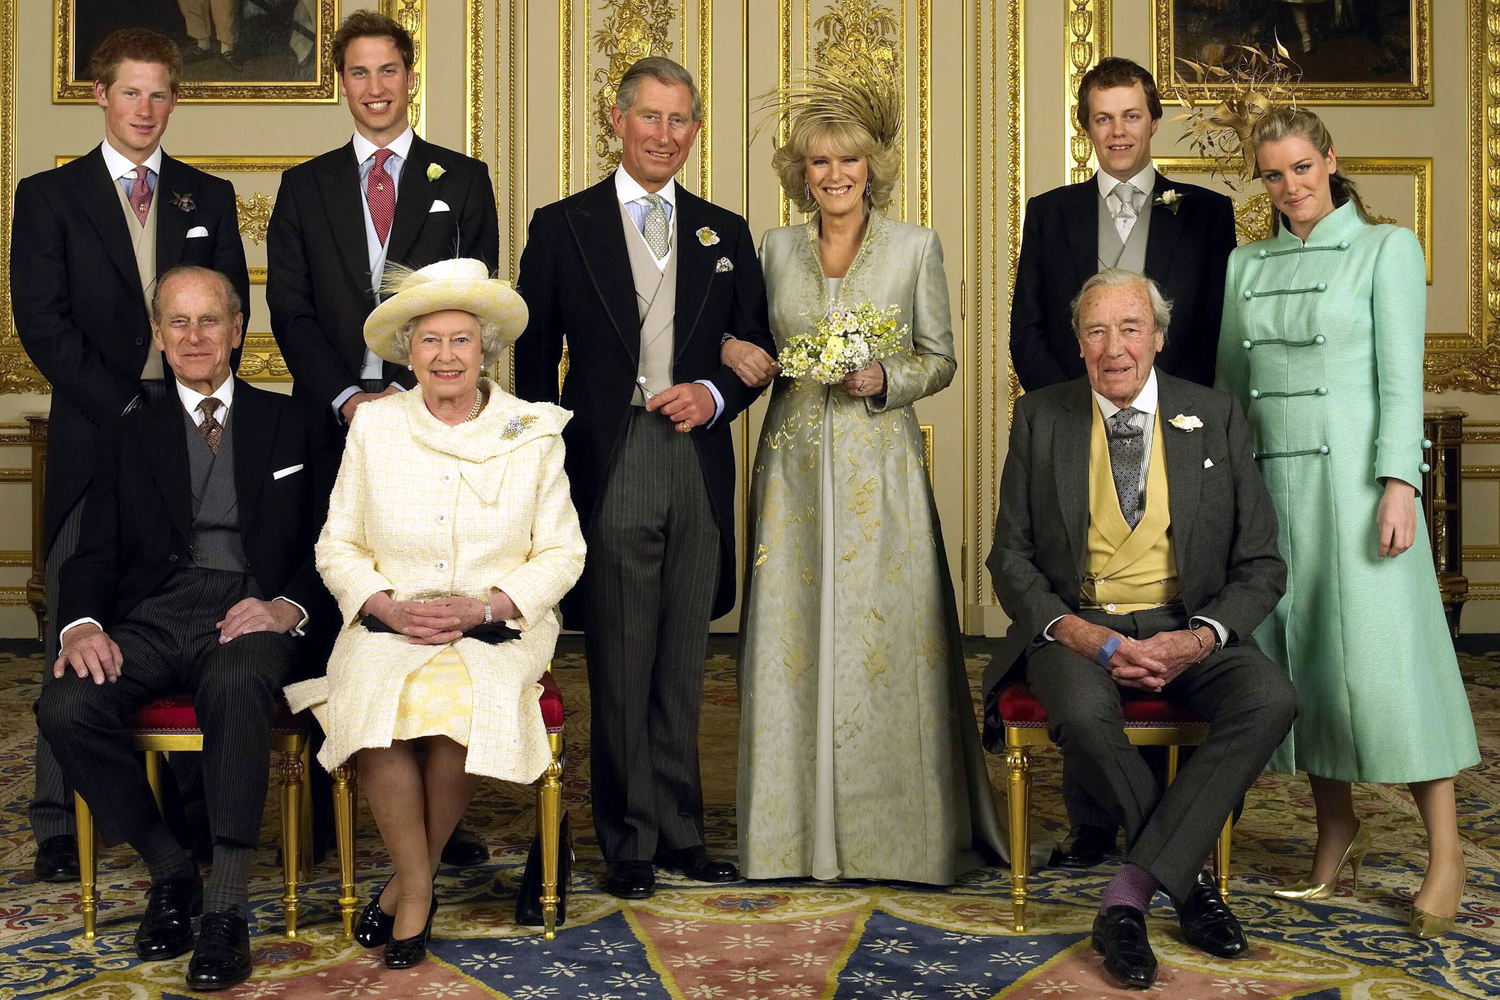 Prince Charles and Camilla Parker Bowles wedding